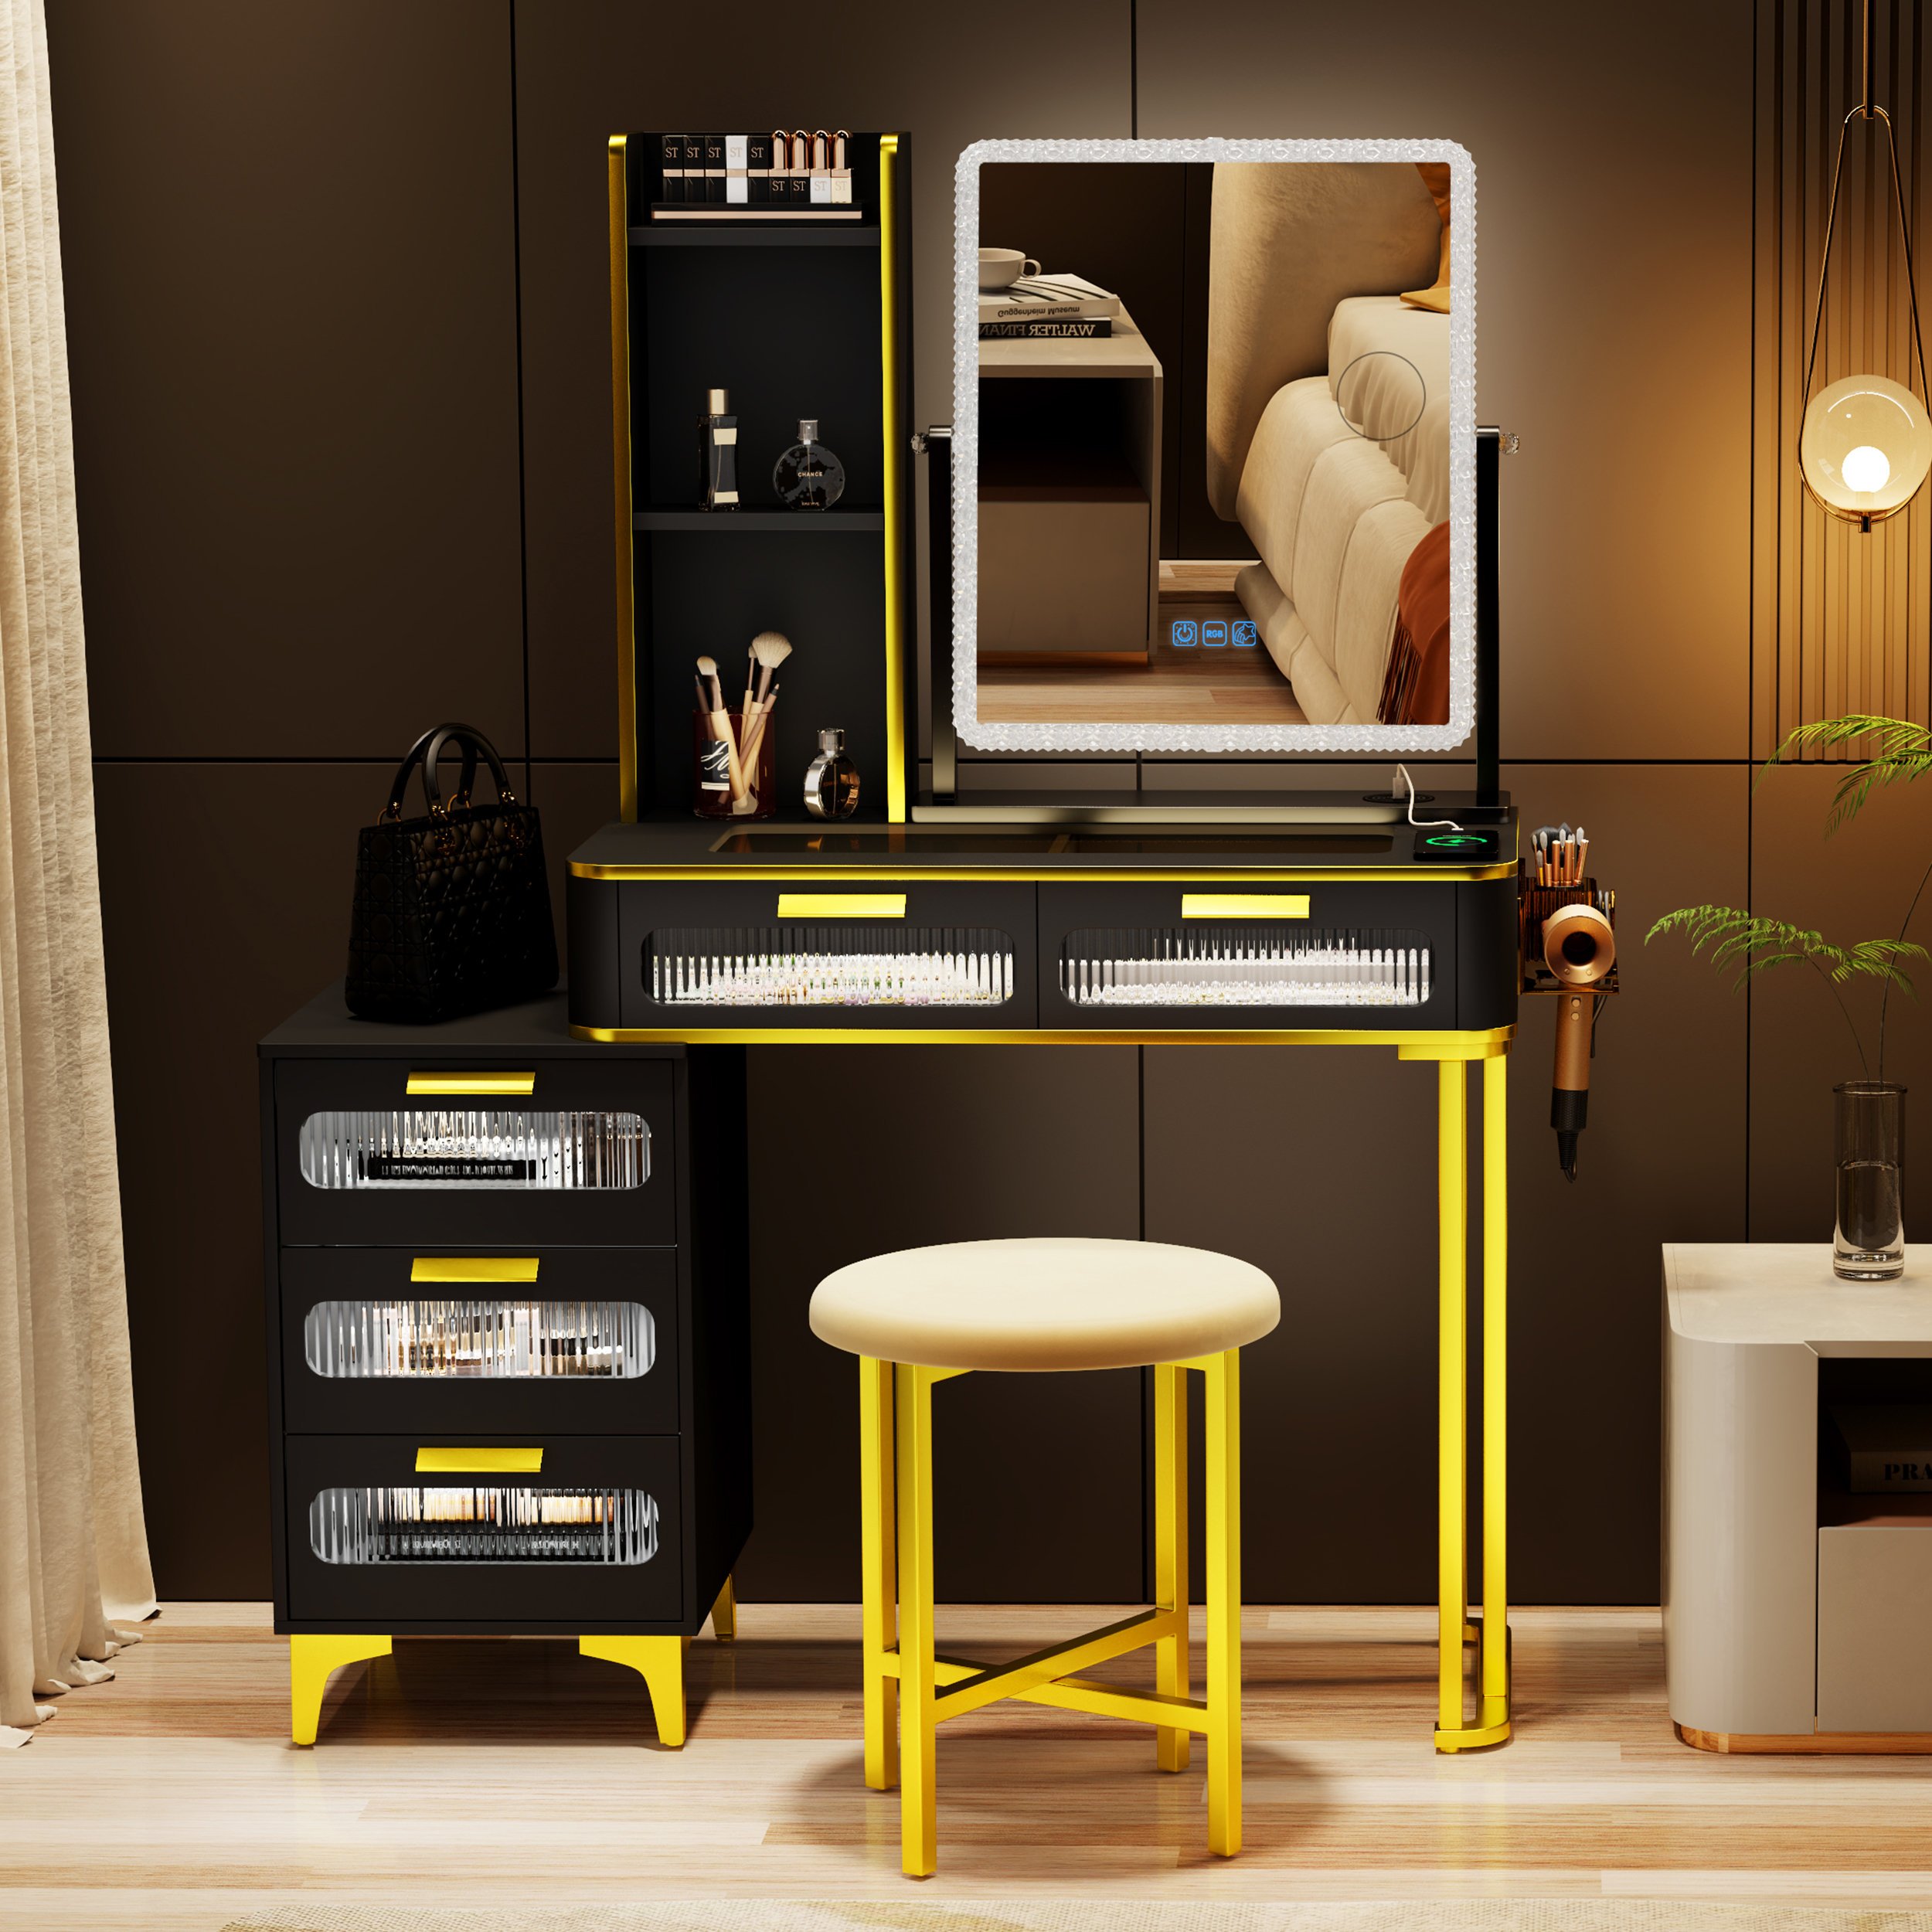 llll.02 double, gold & designer furniture